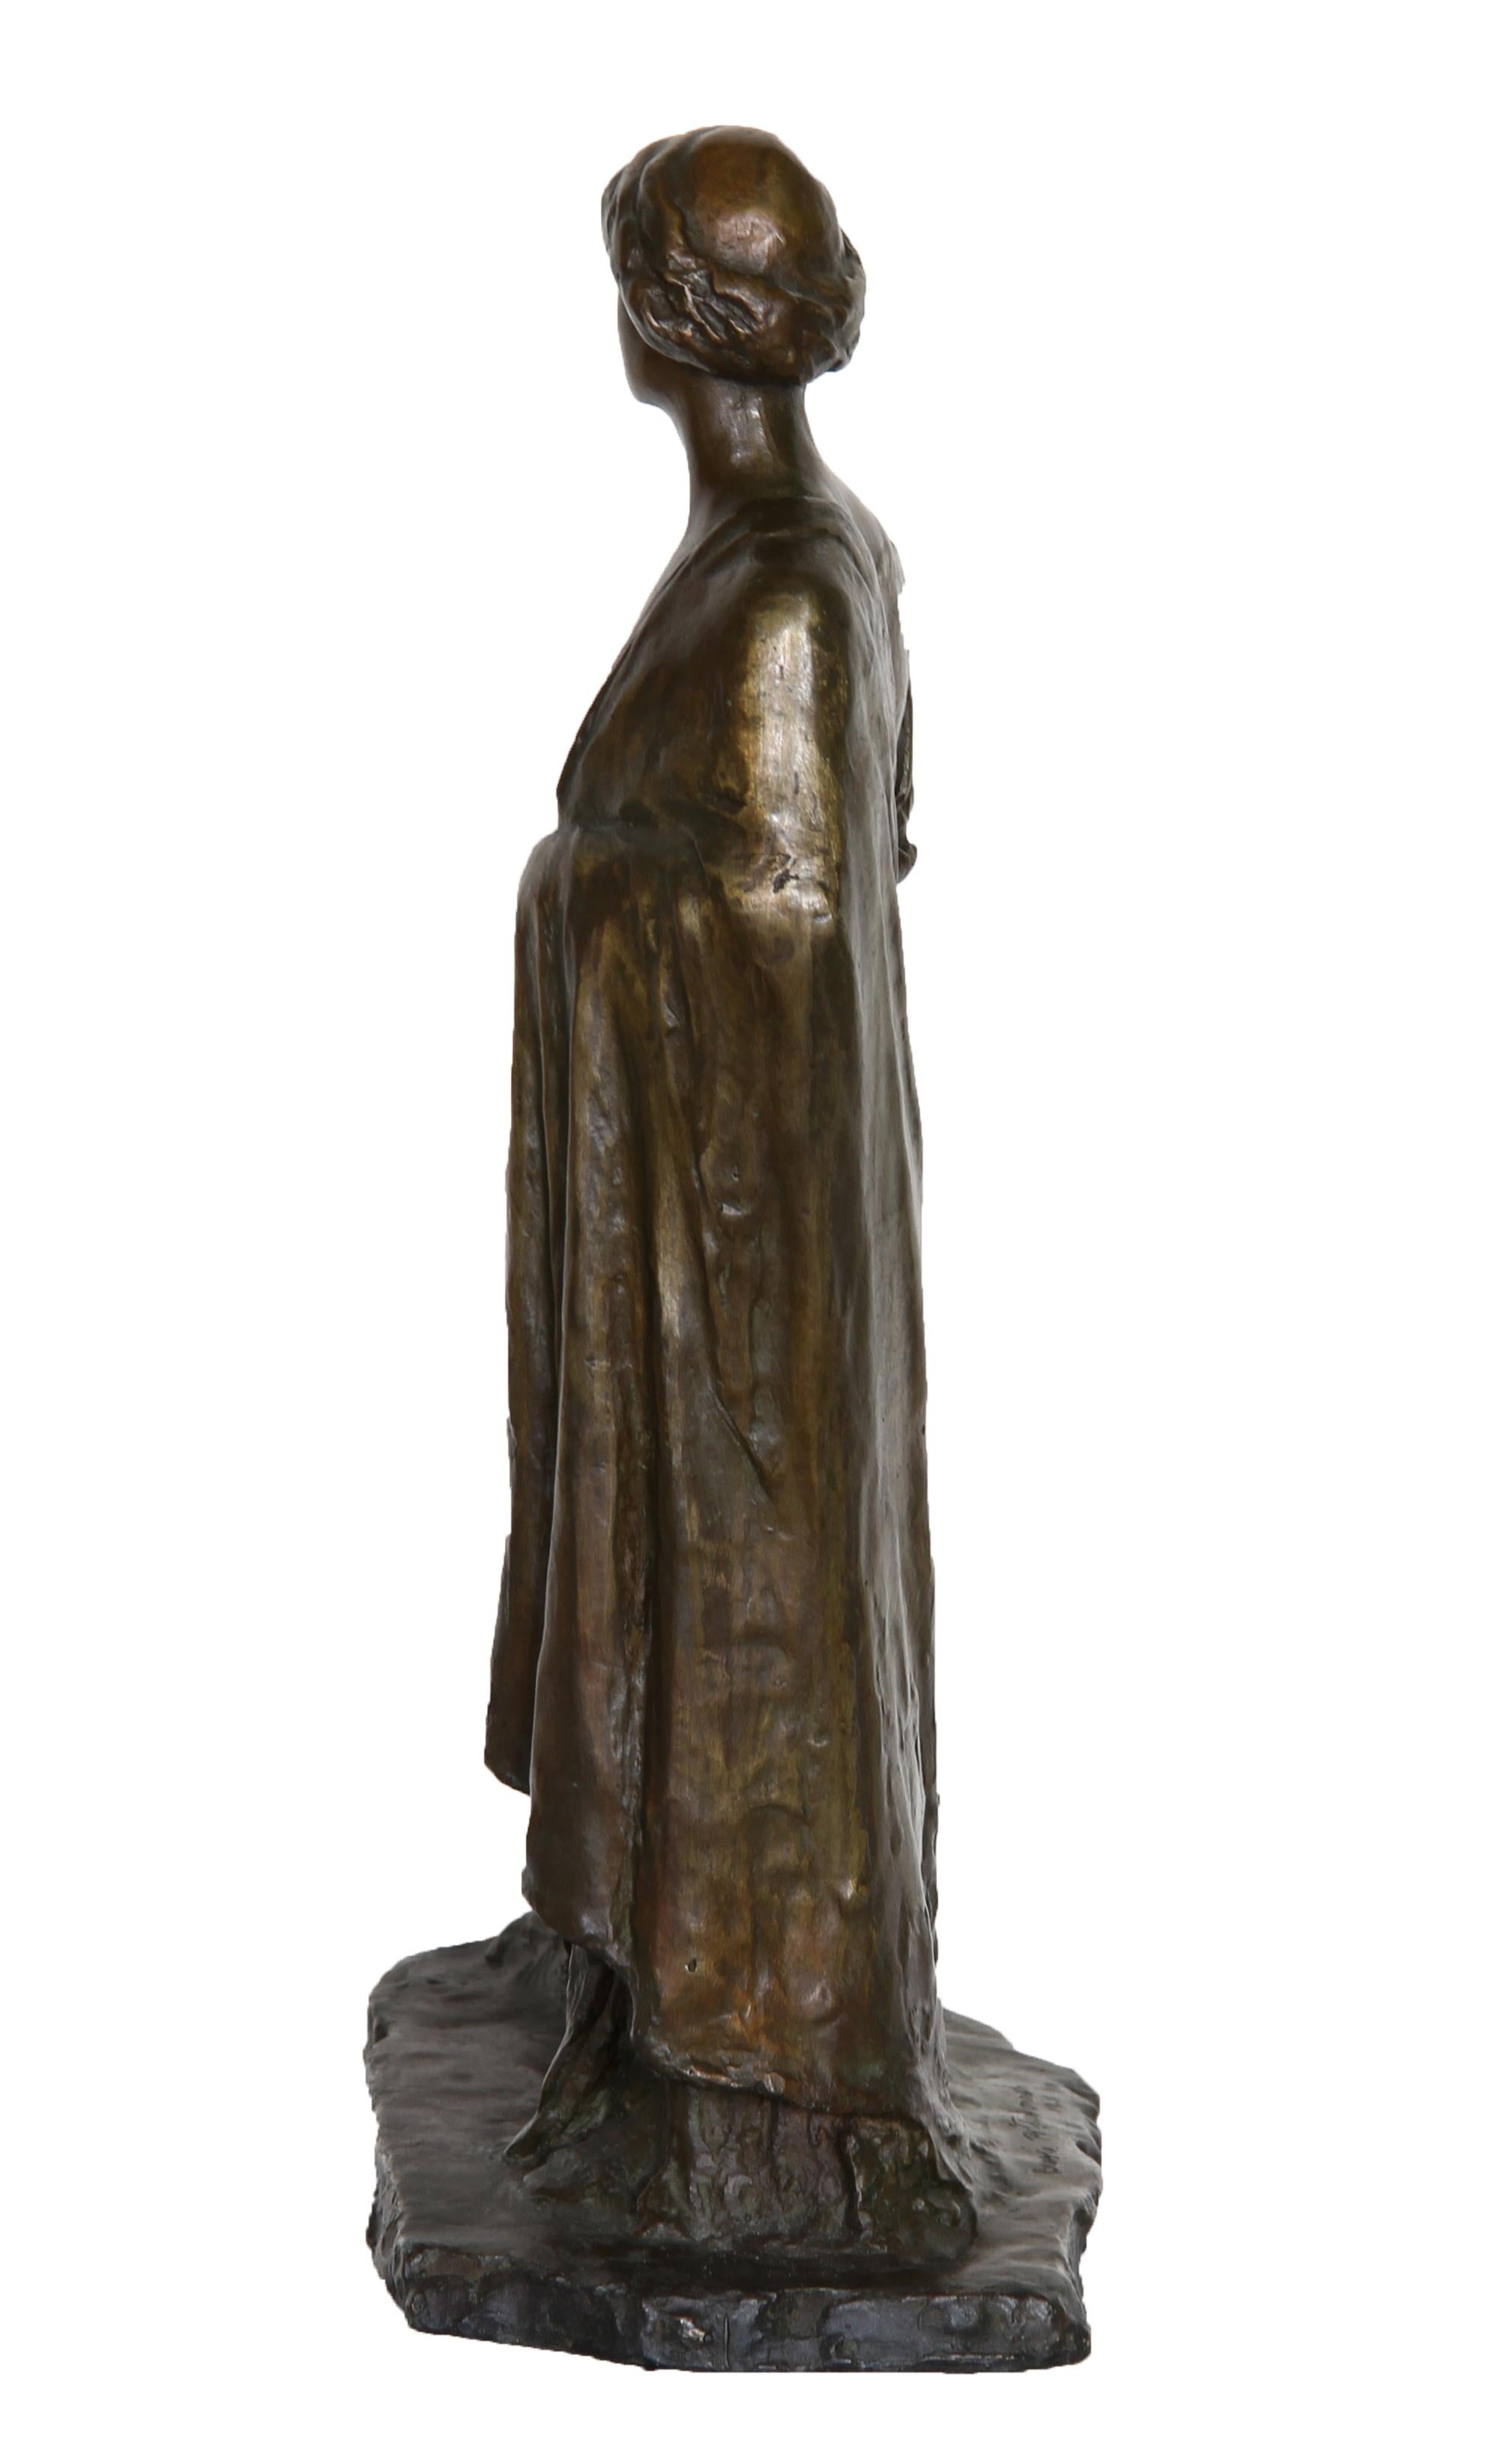 1911 bronze